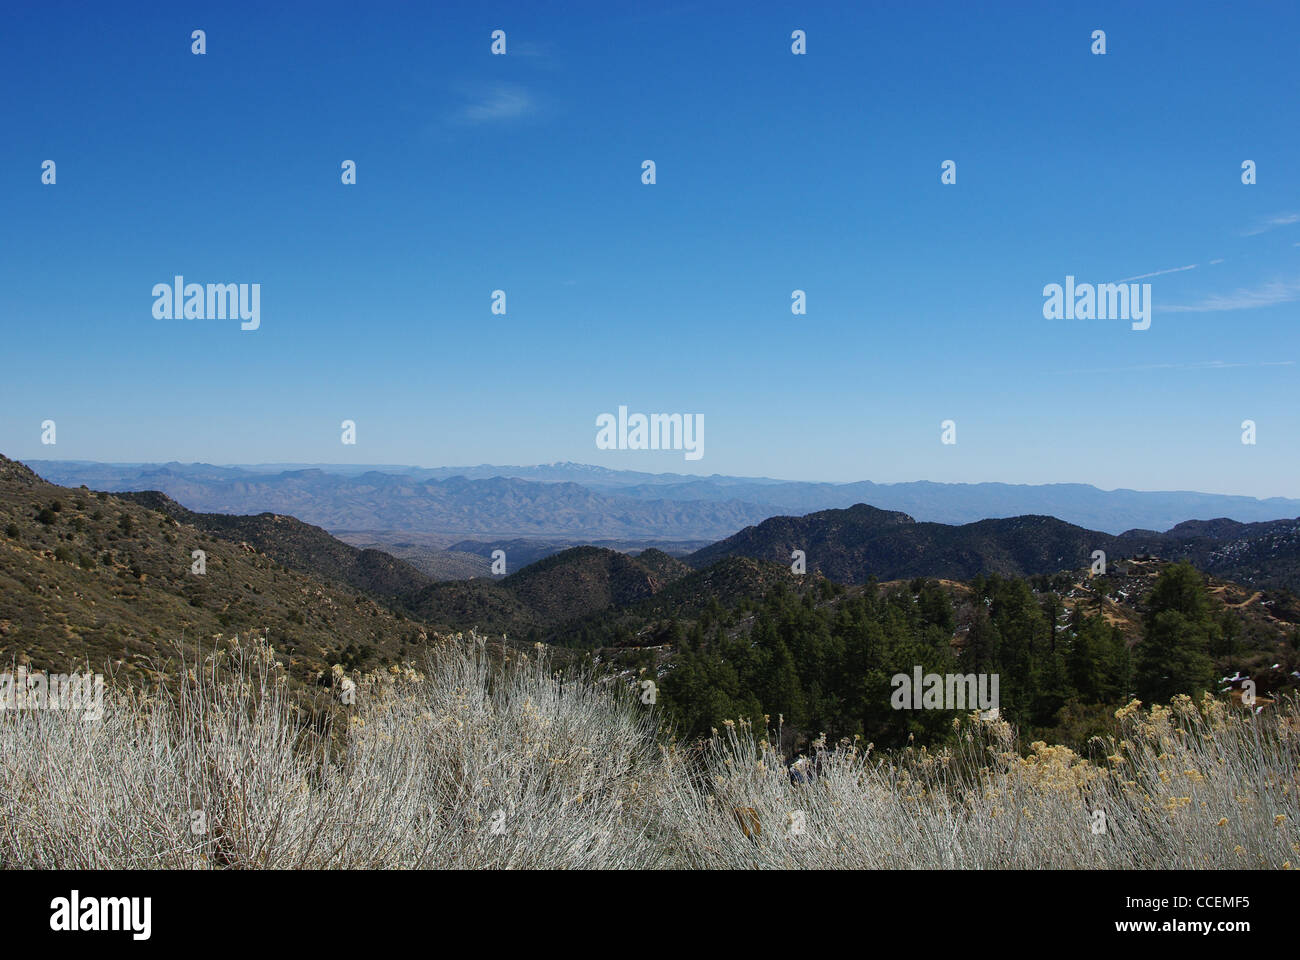 Shrub and wide open mountain view, Northern Arizona Stock Photo